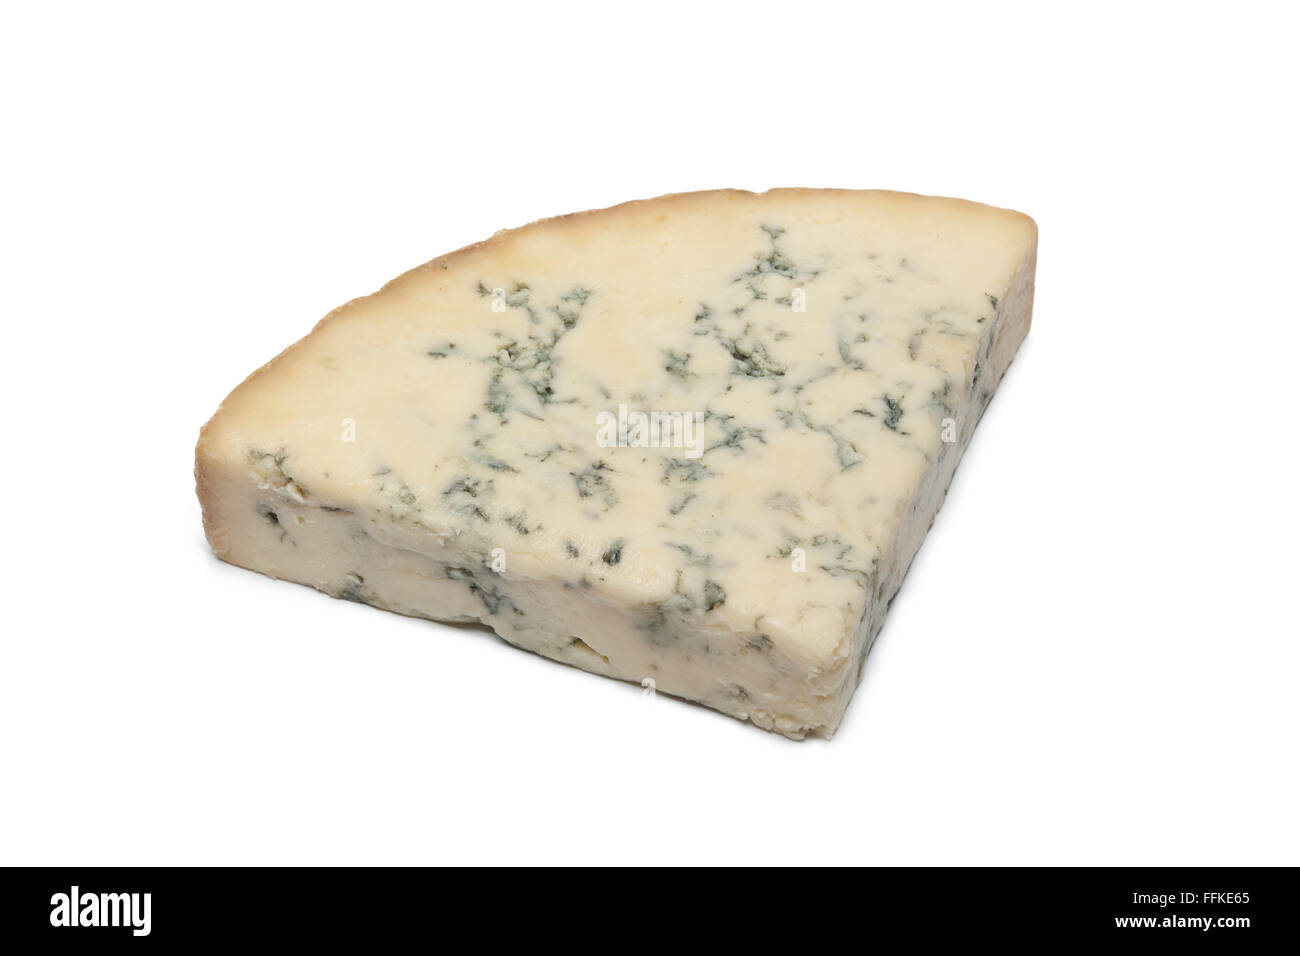 Wedge of Blue Stilton cheese on white background Stock Photo